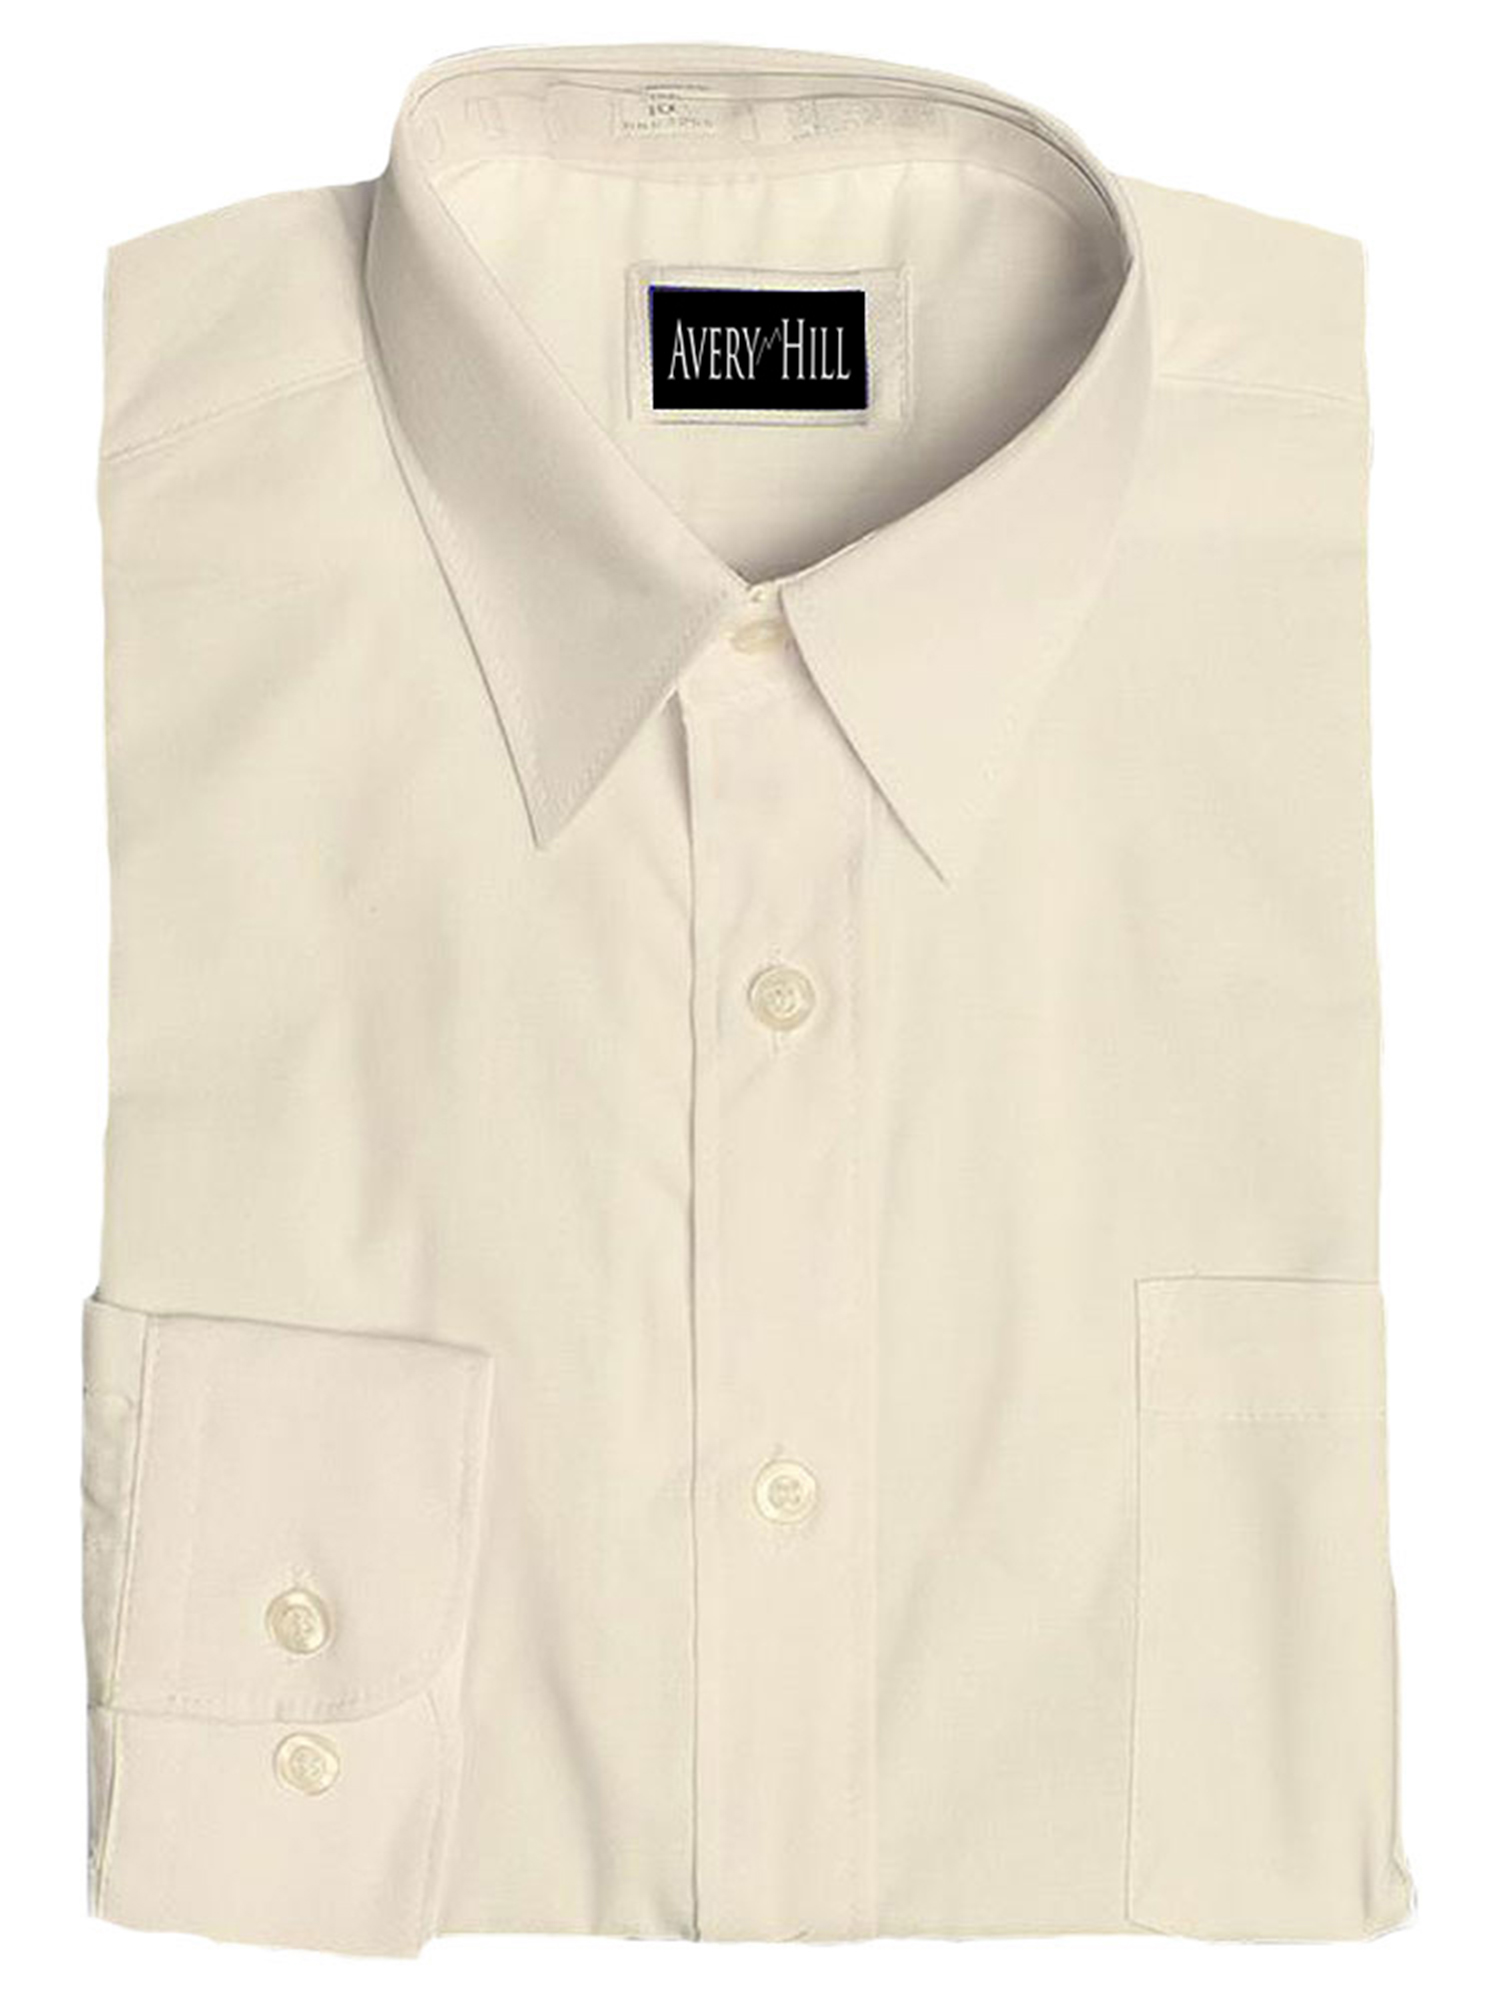 Boys White or Ivory Long Sleeve Wrinkle Resistant Dress Shirt IV L